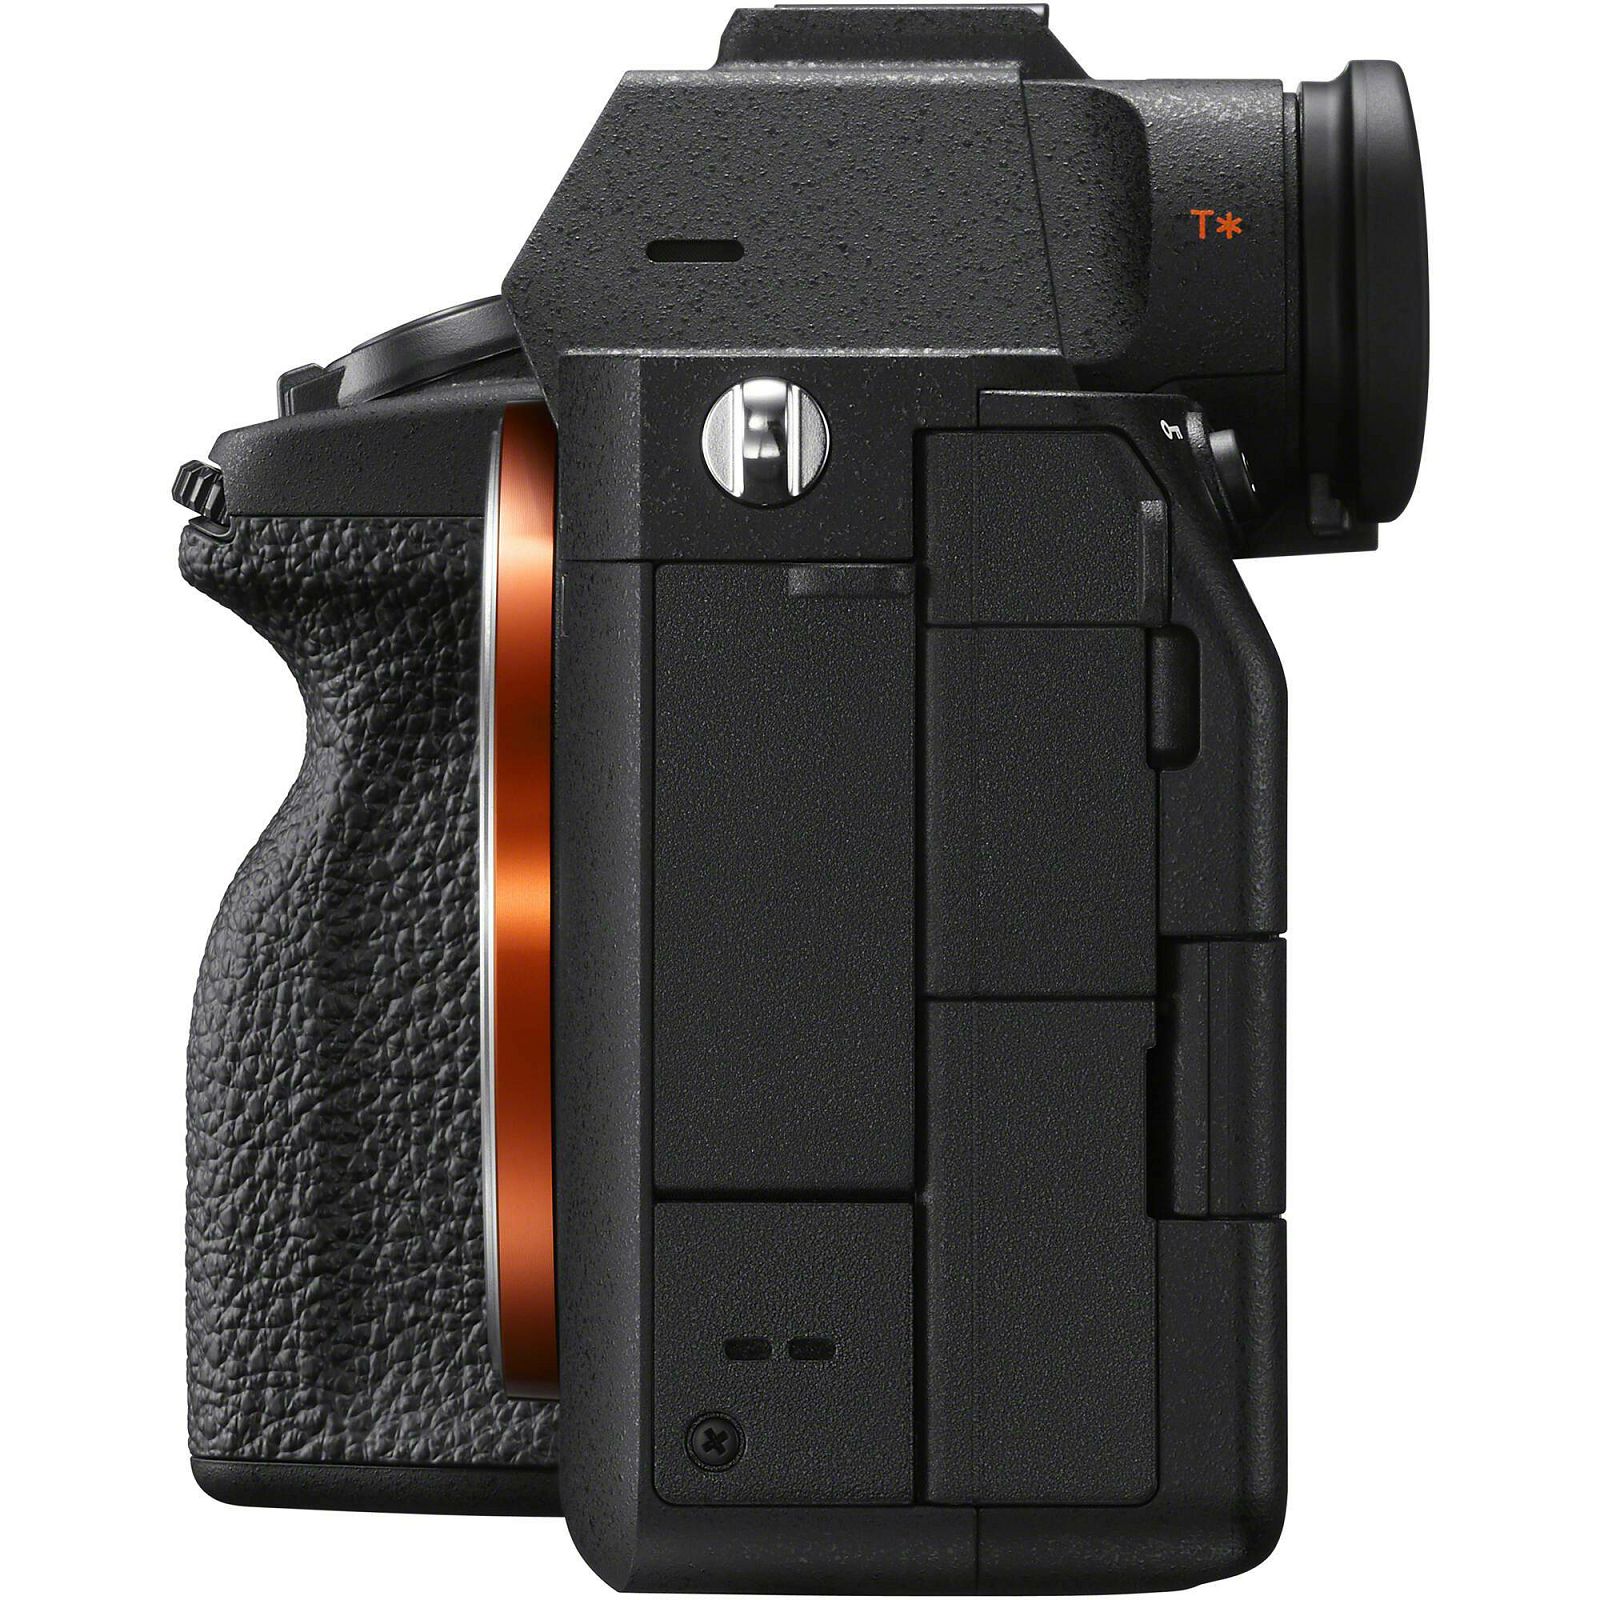 Sony Alpha a7 IV Body Mirrorless Digital Camera bezrcalni digitalni fotoaparat tijelo (ILCE7M4B.CEC) 